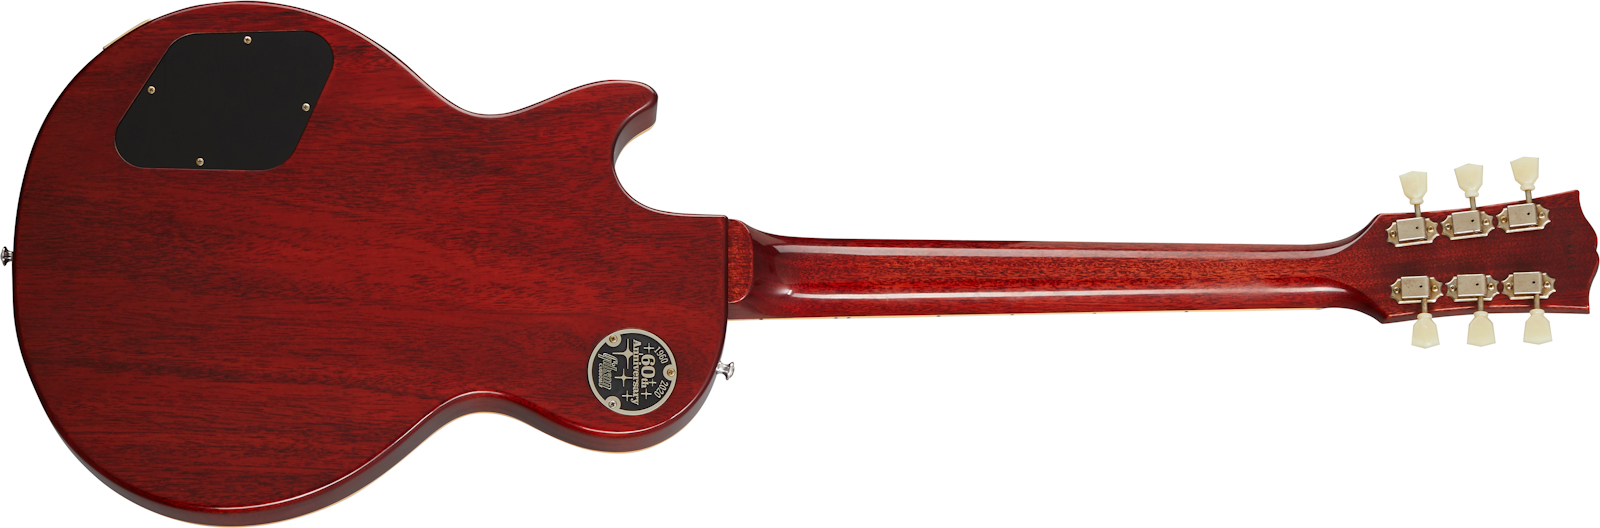 Gibson Custom Shop Les Paul Standard 1960 V1 60th Anniversary 2h Ht Rw - Vos Deep Cherry Sunburst - Single cut electric guitar - Variation 1